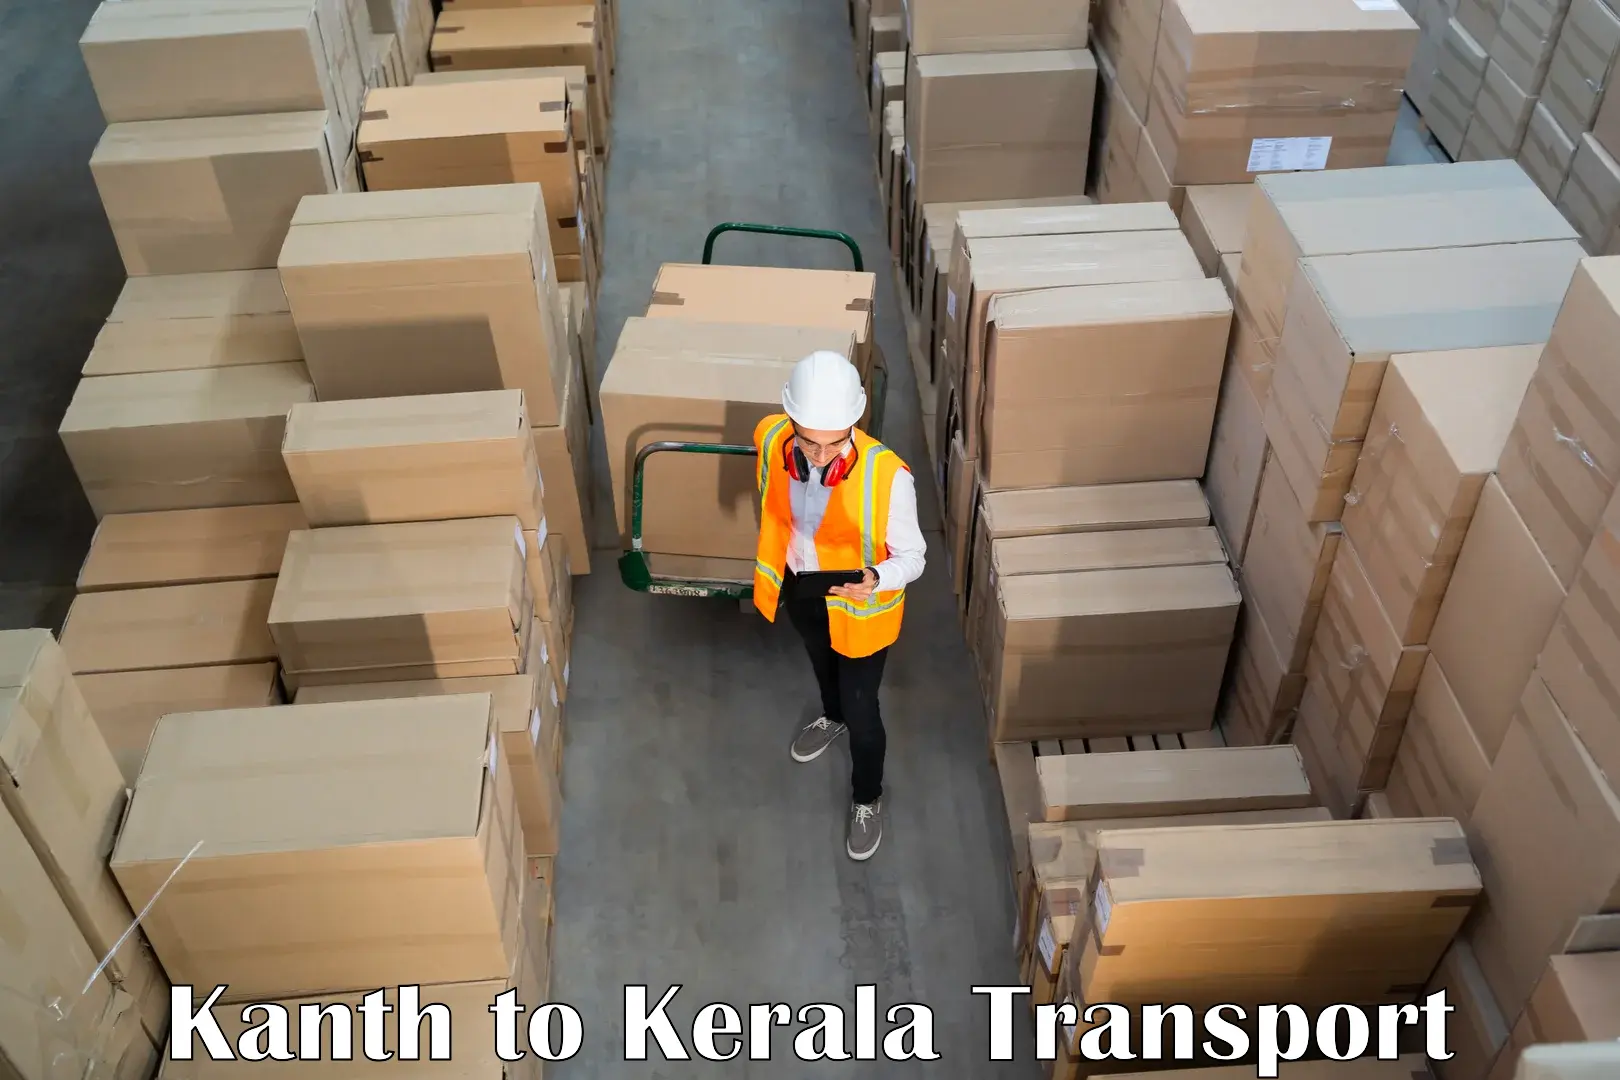 Shipping partner in Kanth to Kochi